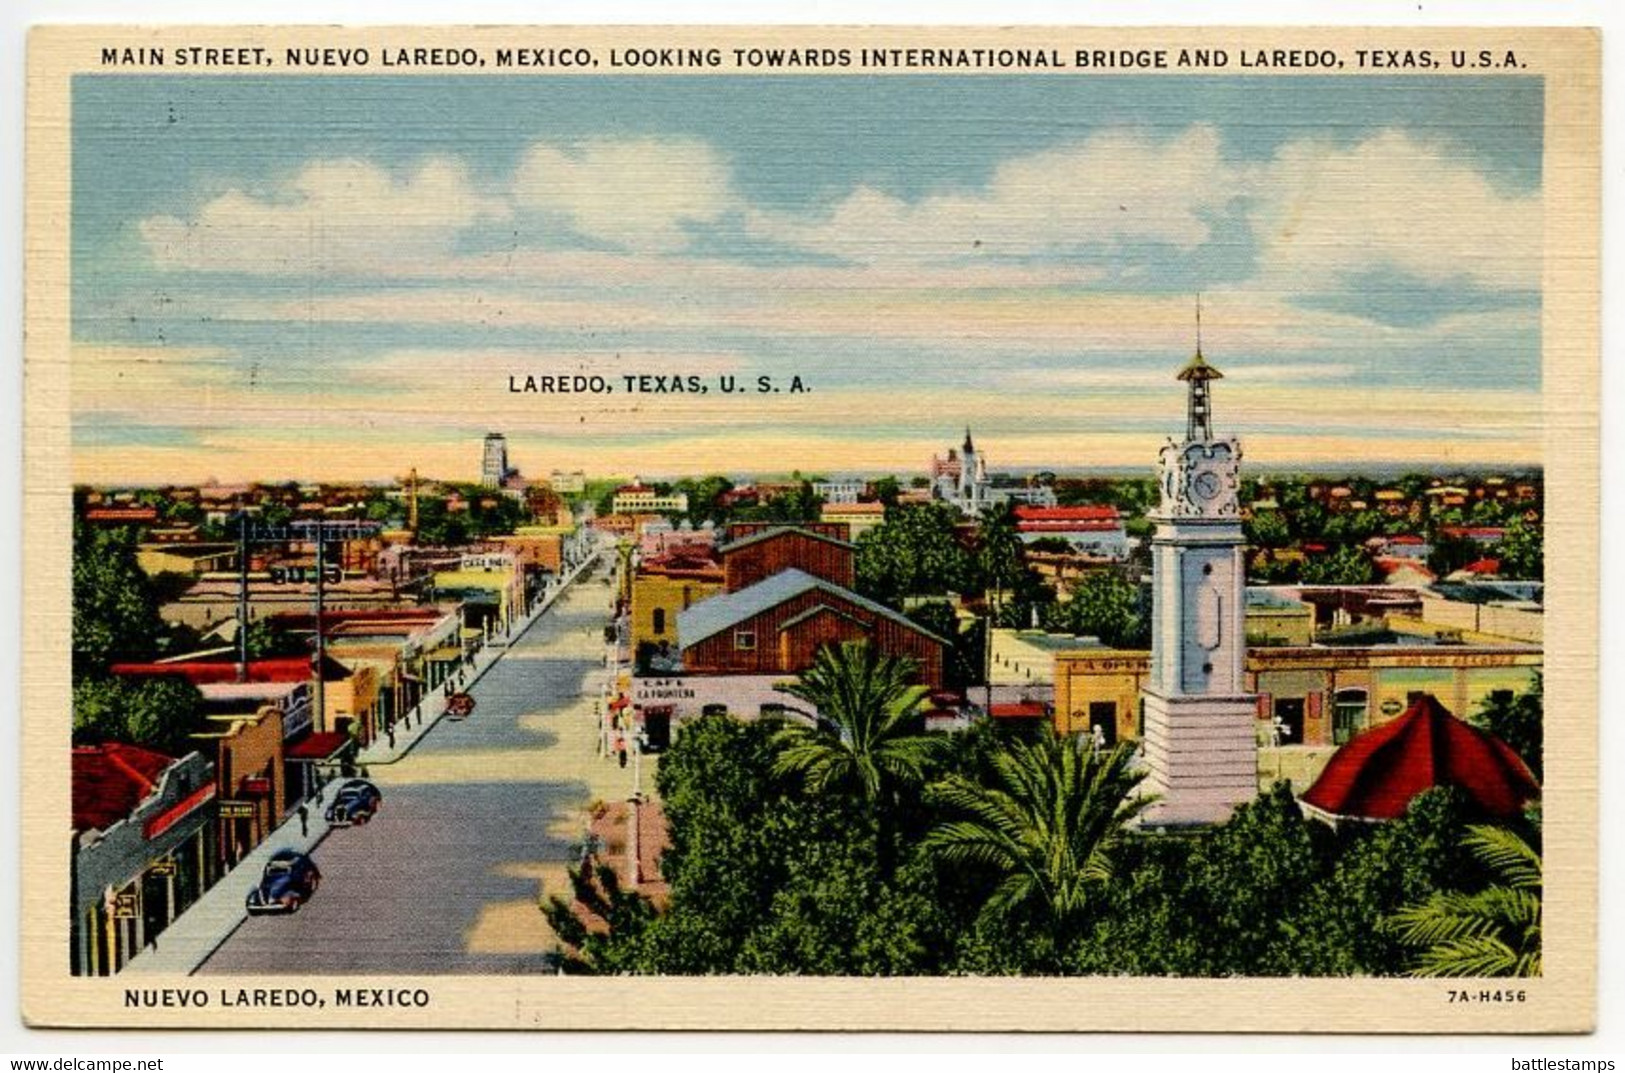 United States 1937 Postcard Laredo, Texas - Main Street, Nuevo Laredo Mexico; San Antonio & Laredo RPO Postmark - Laredo